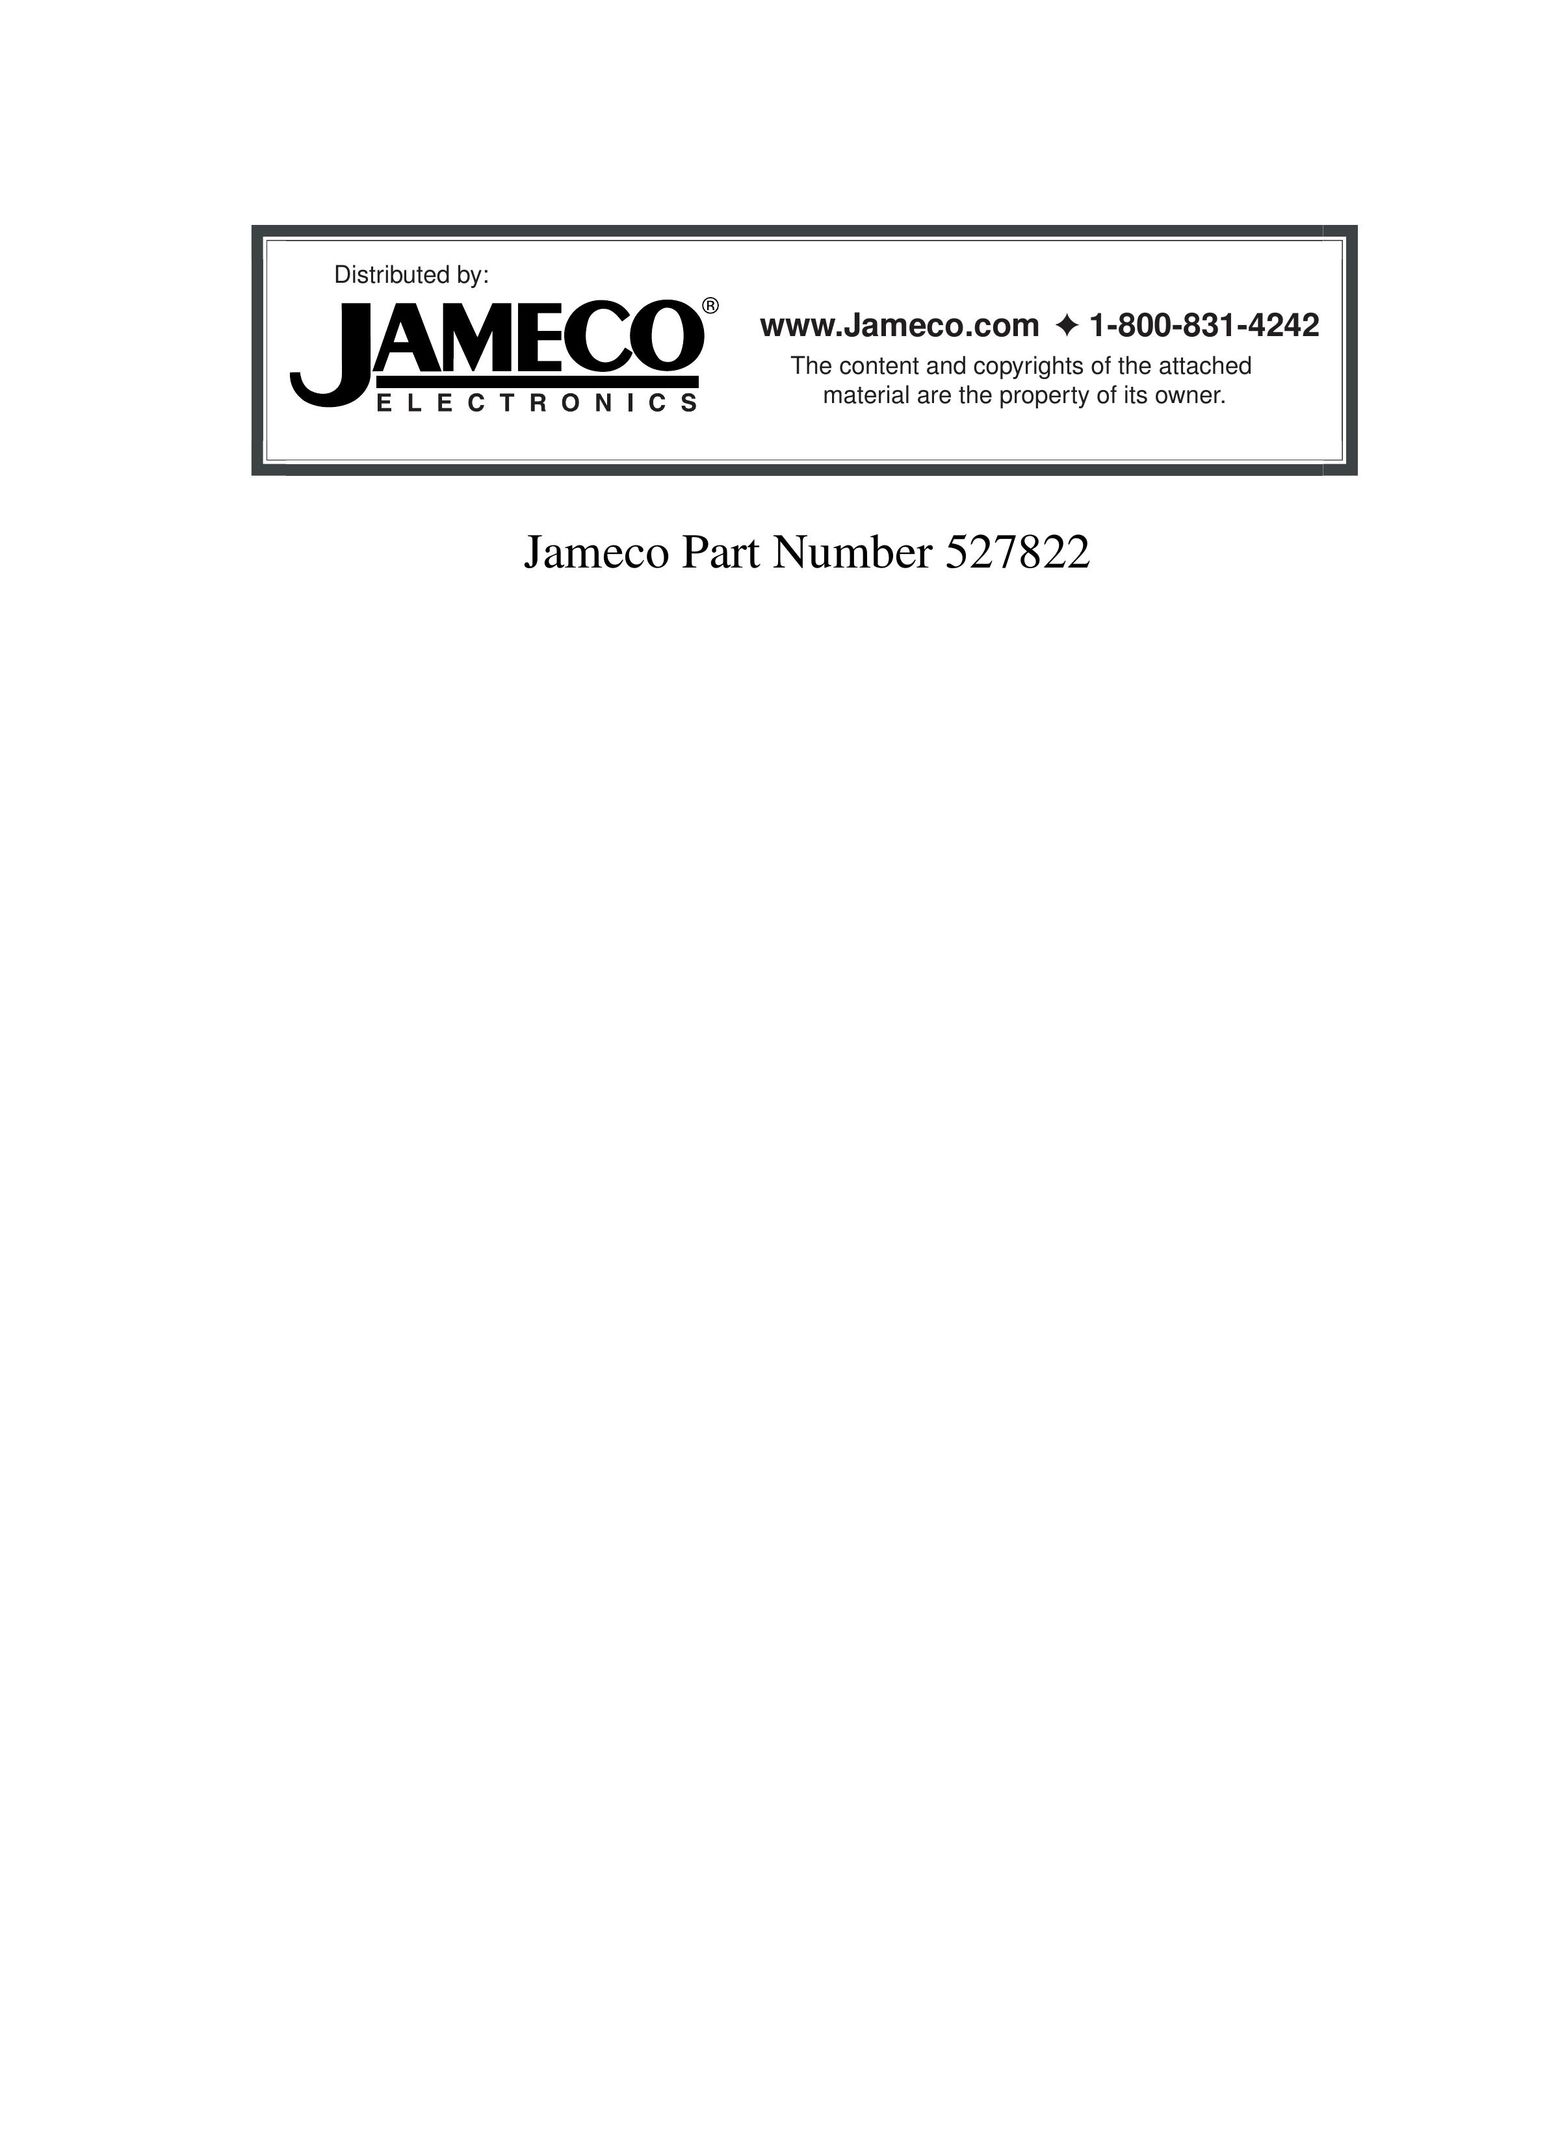 Jameco Electronics 527822 Printer Accessories User Manual